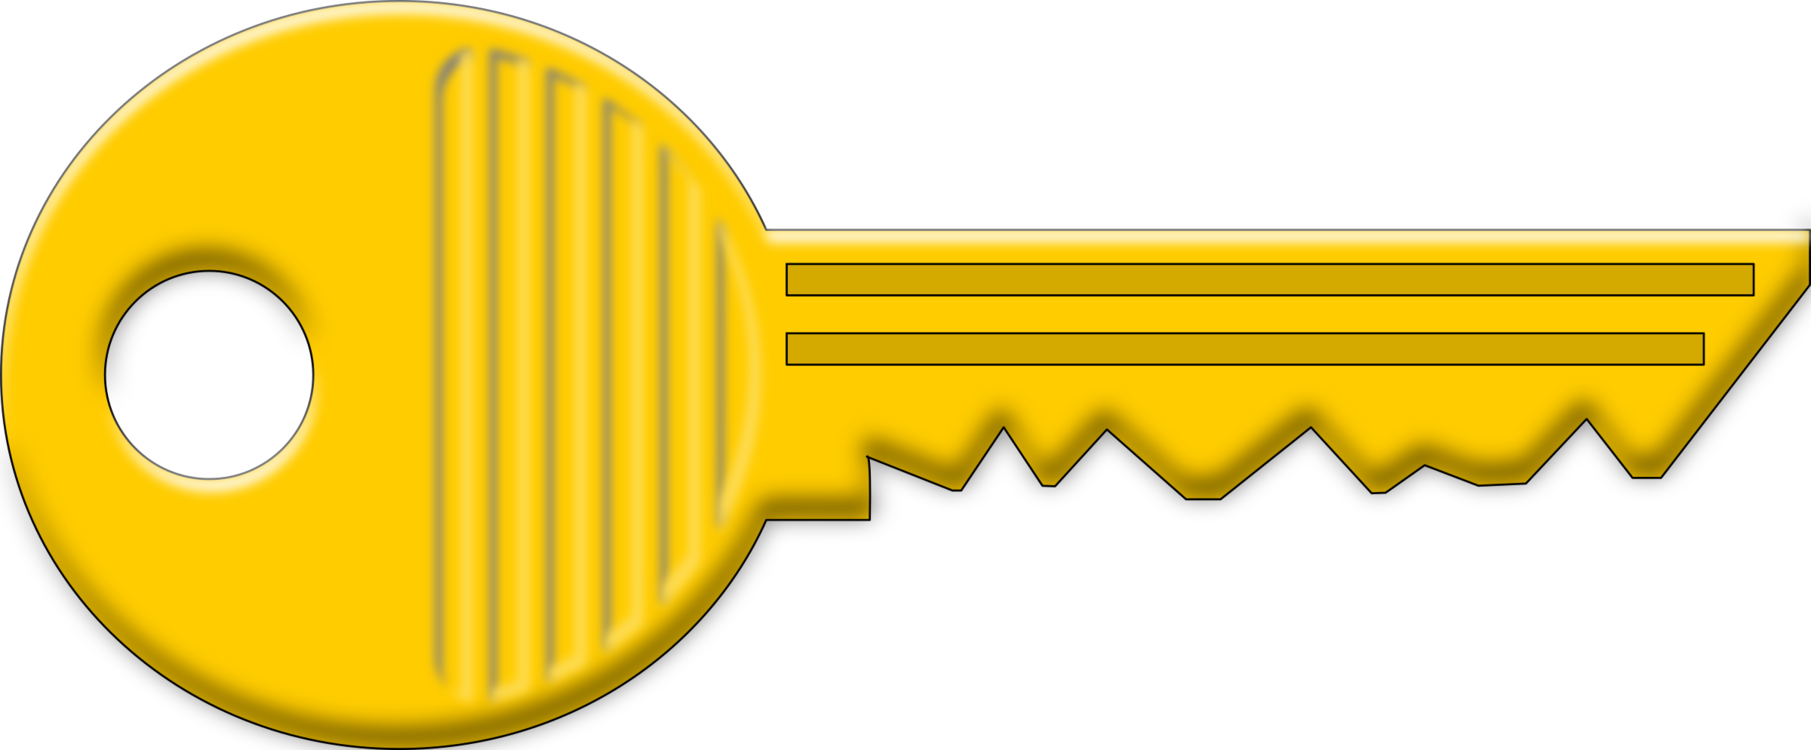 Angle,Symbol,Yellow